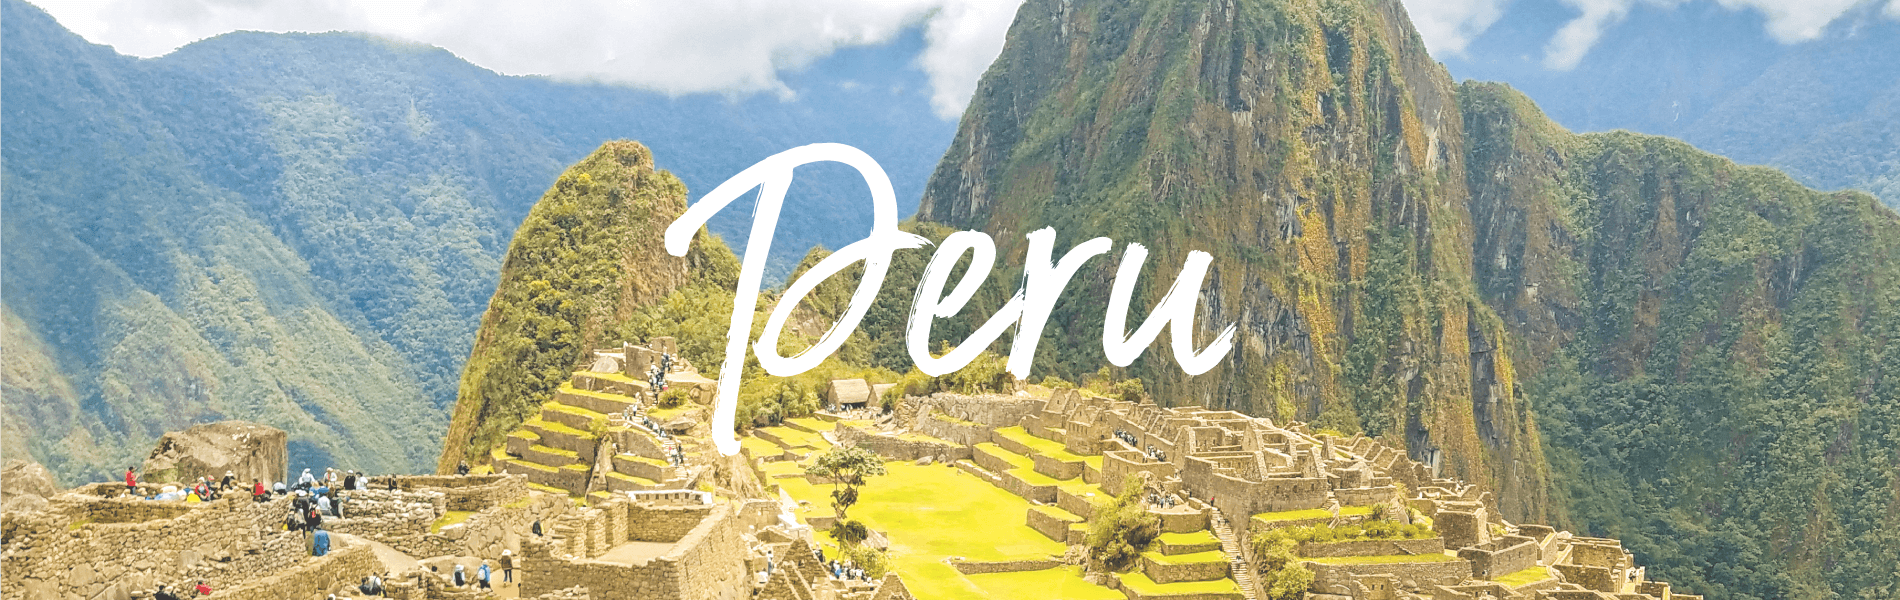 Peru Header Image